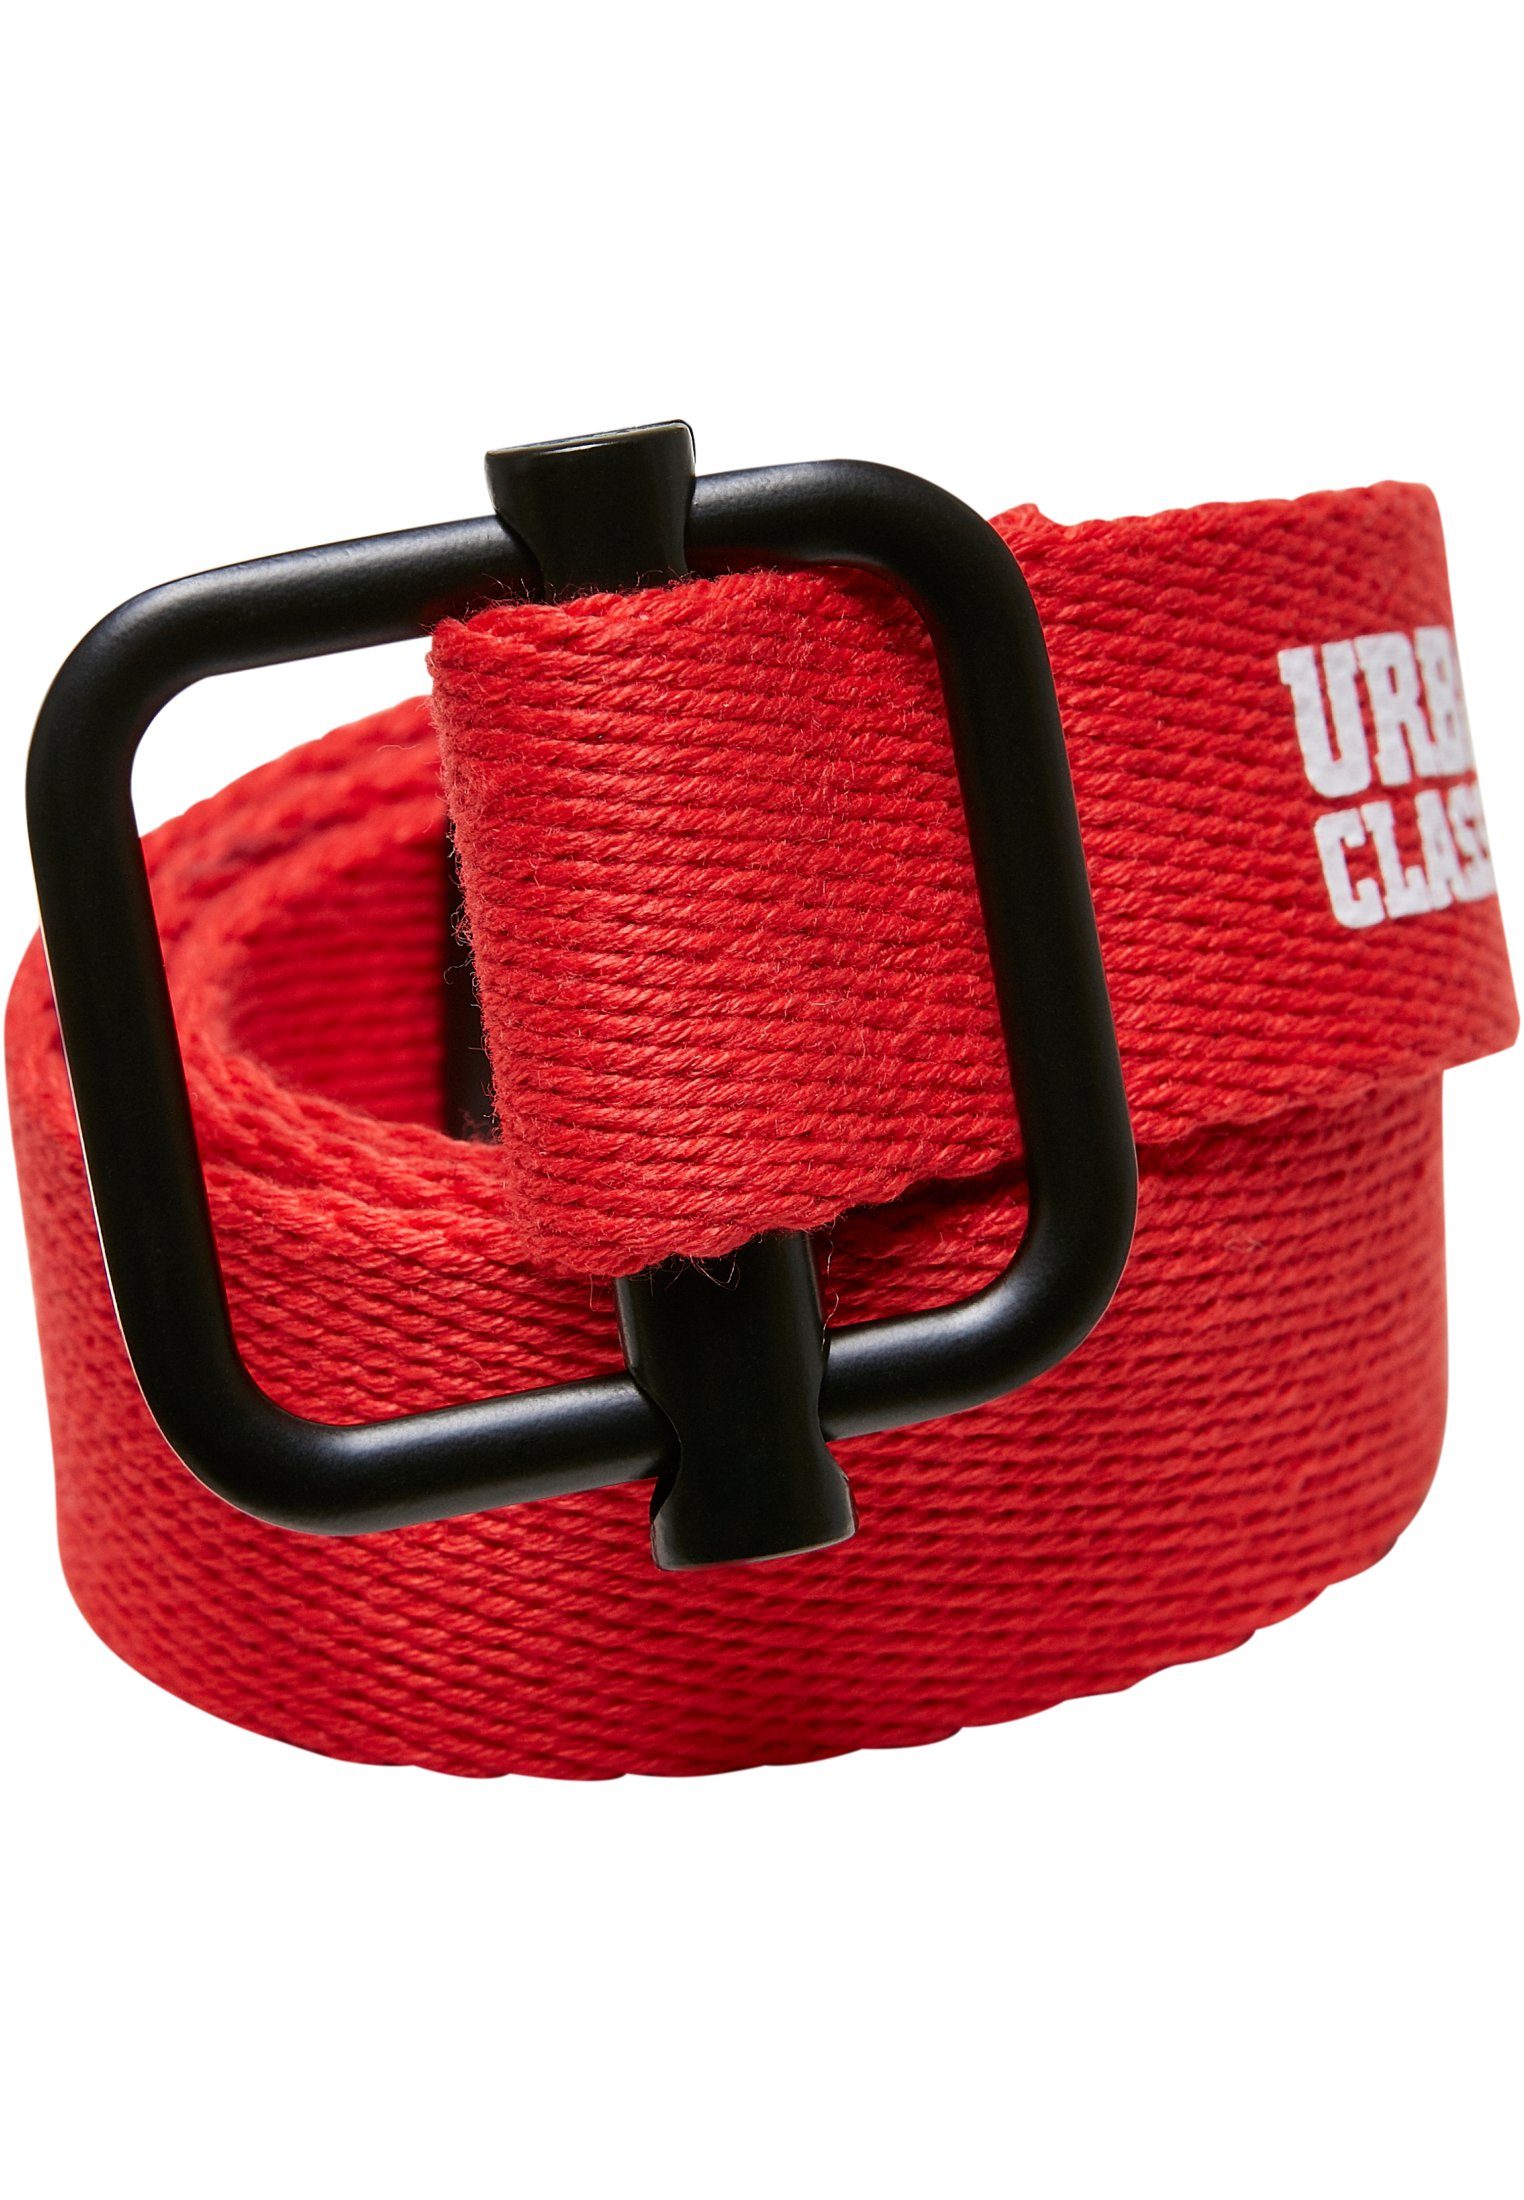 URBAN CLASSICS Hüftgürtel Accessoires Industrial Belt 2-Pack Kids Canvas black-red